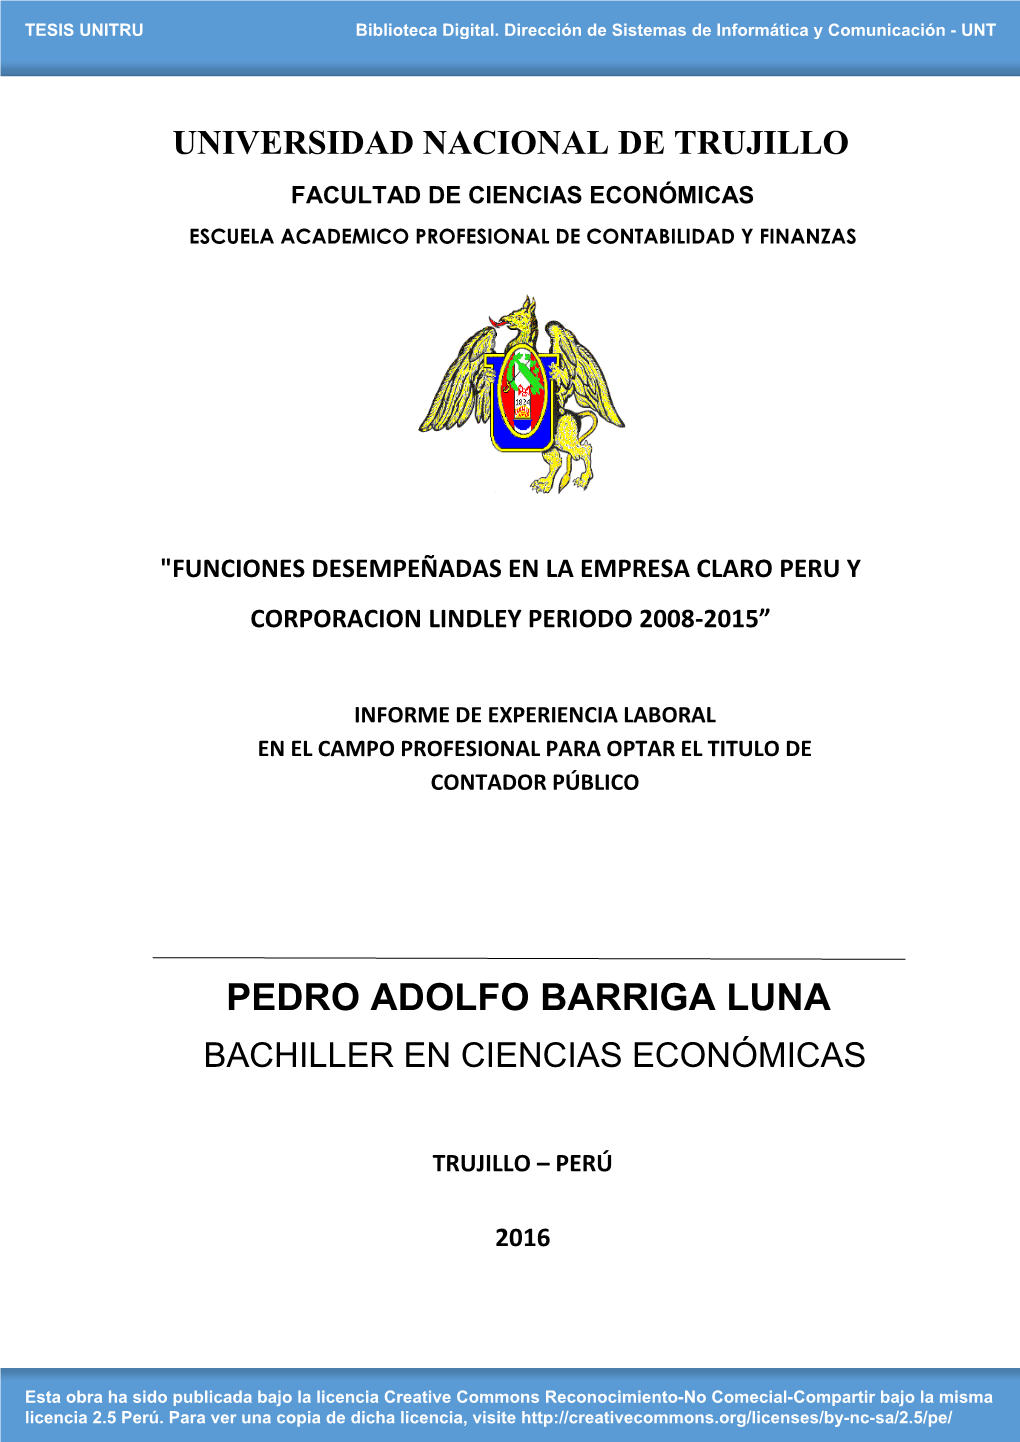 Pedro Adolfo Barriga Luna Bachiller En Ciencias Económicas